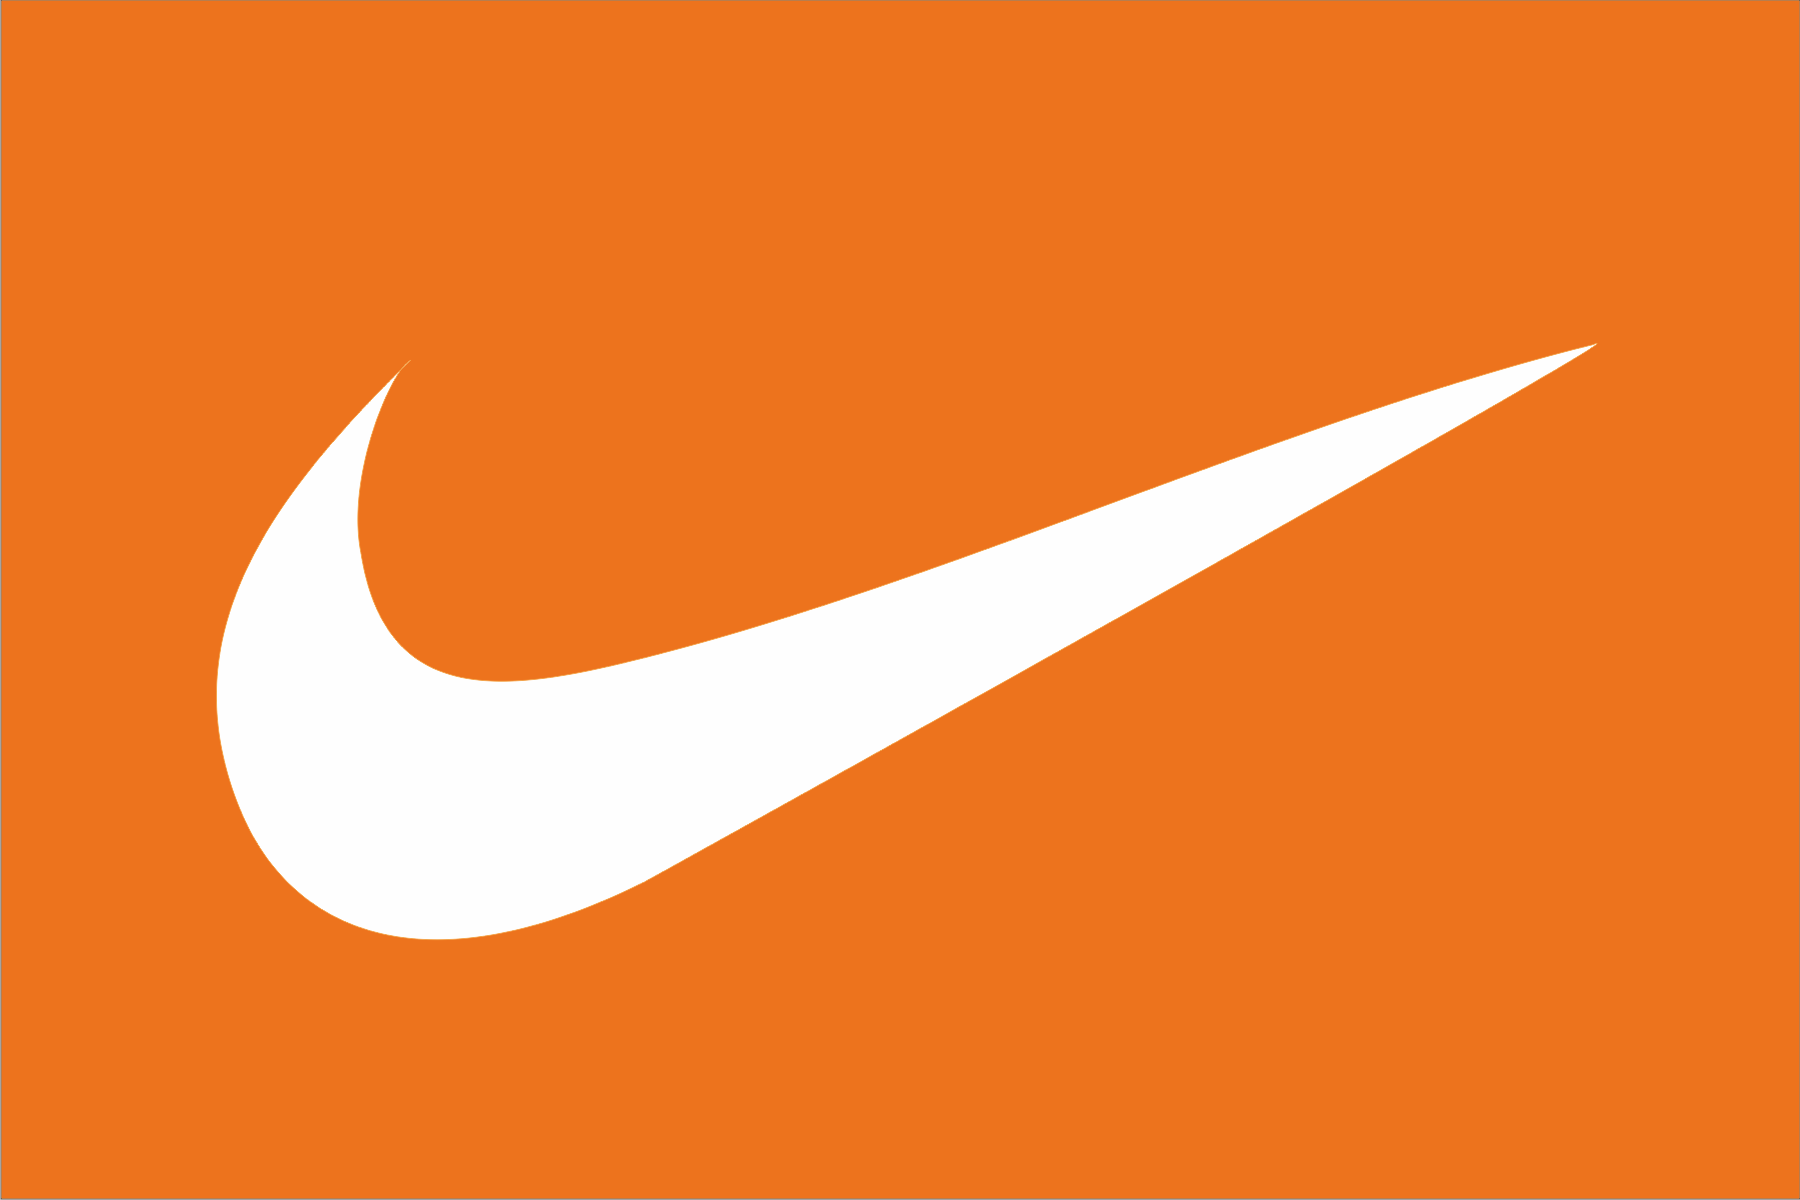 nike orange swoosh logo